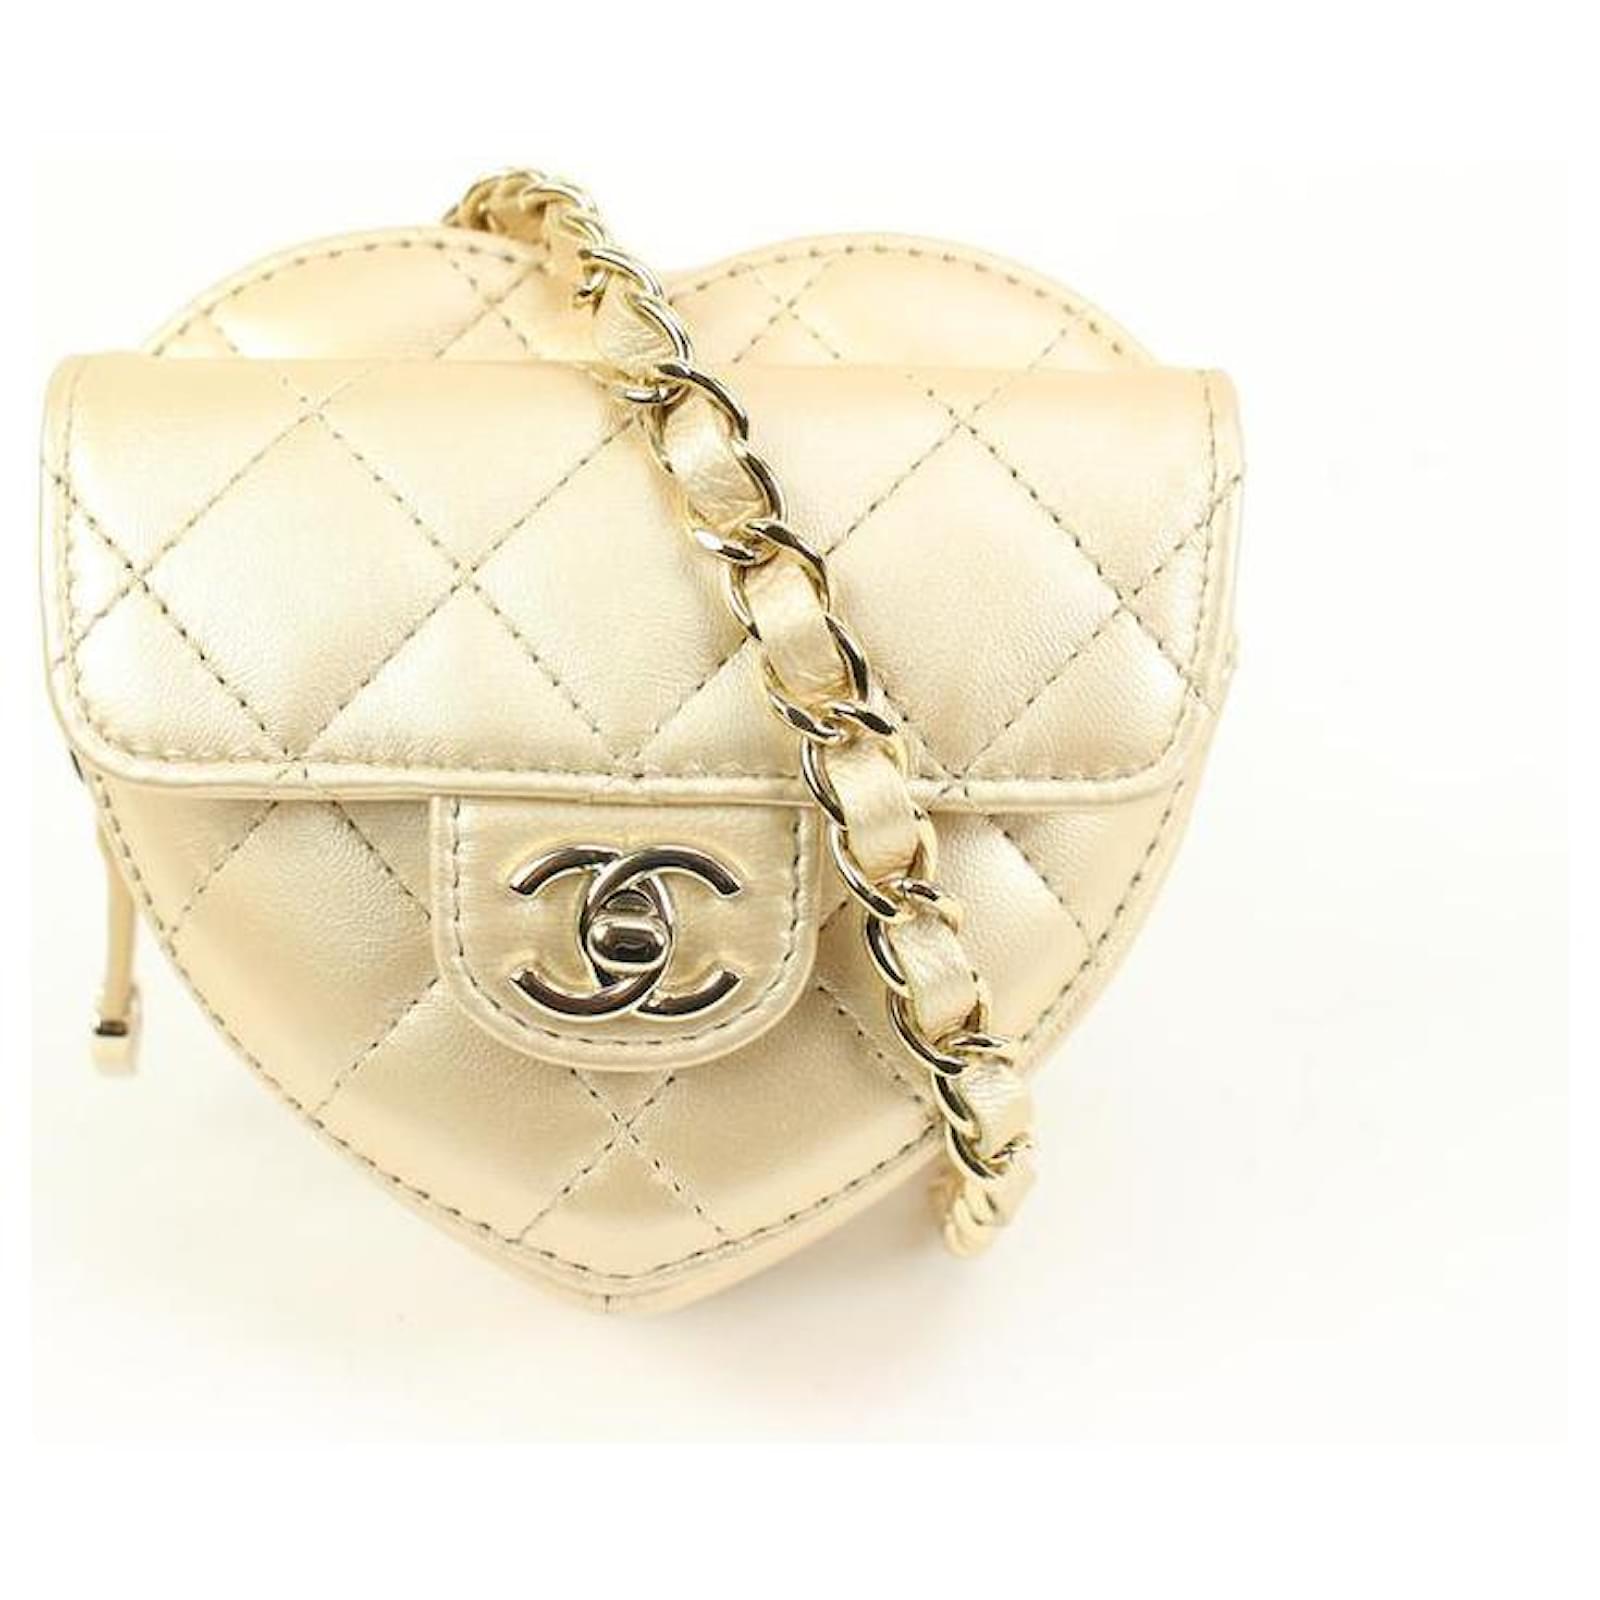 Chanel Mini CC in Love Heart Bag